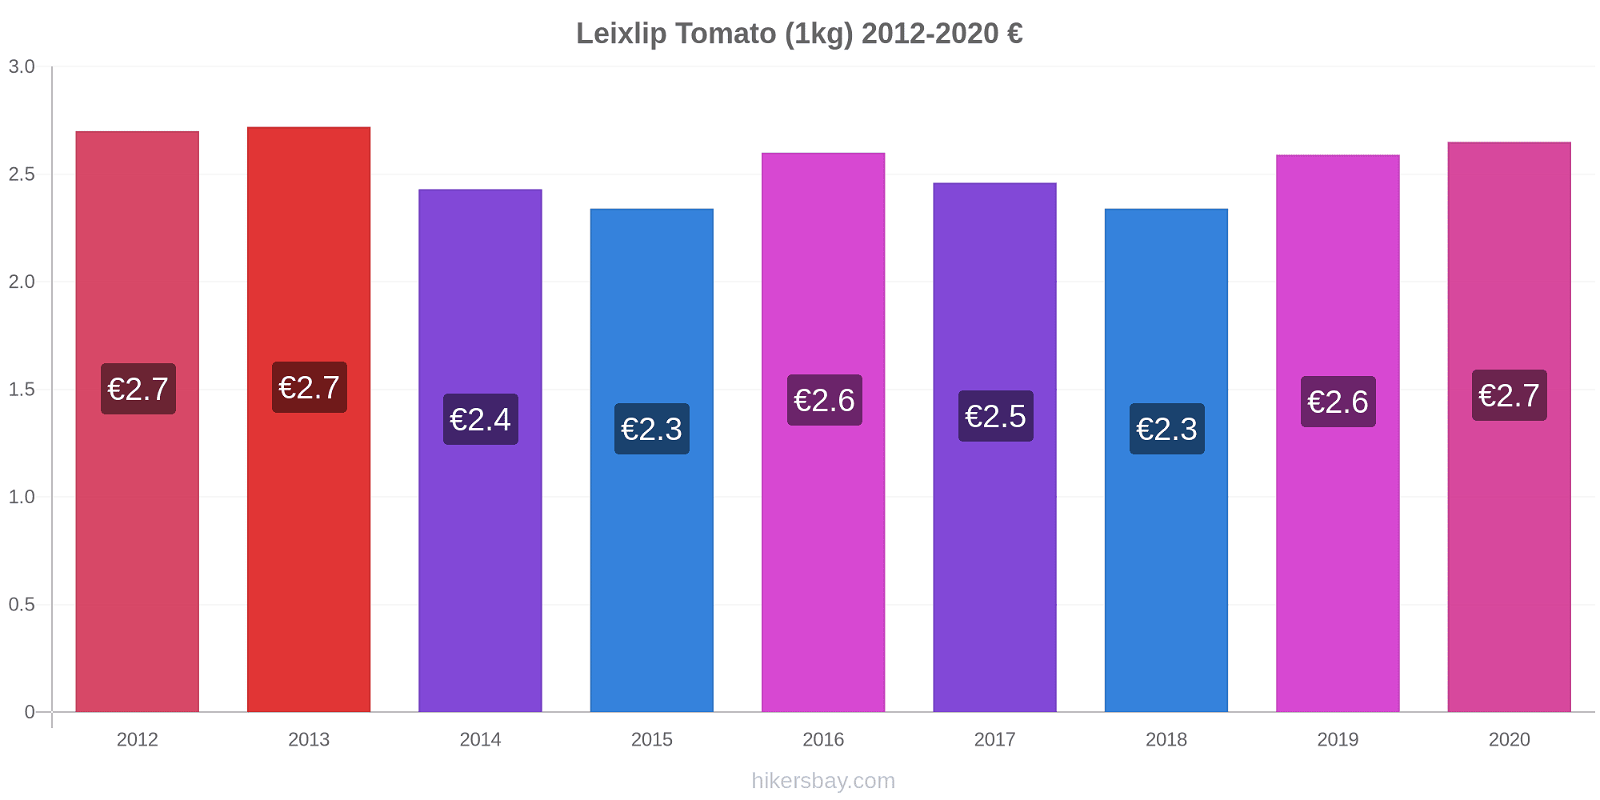 Leixlip price changes Tomato (1kg) hikersbay.com